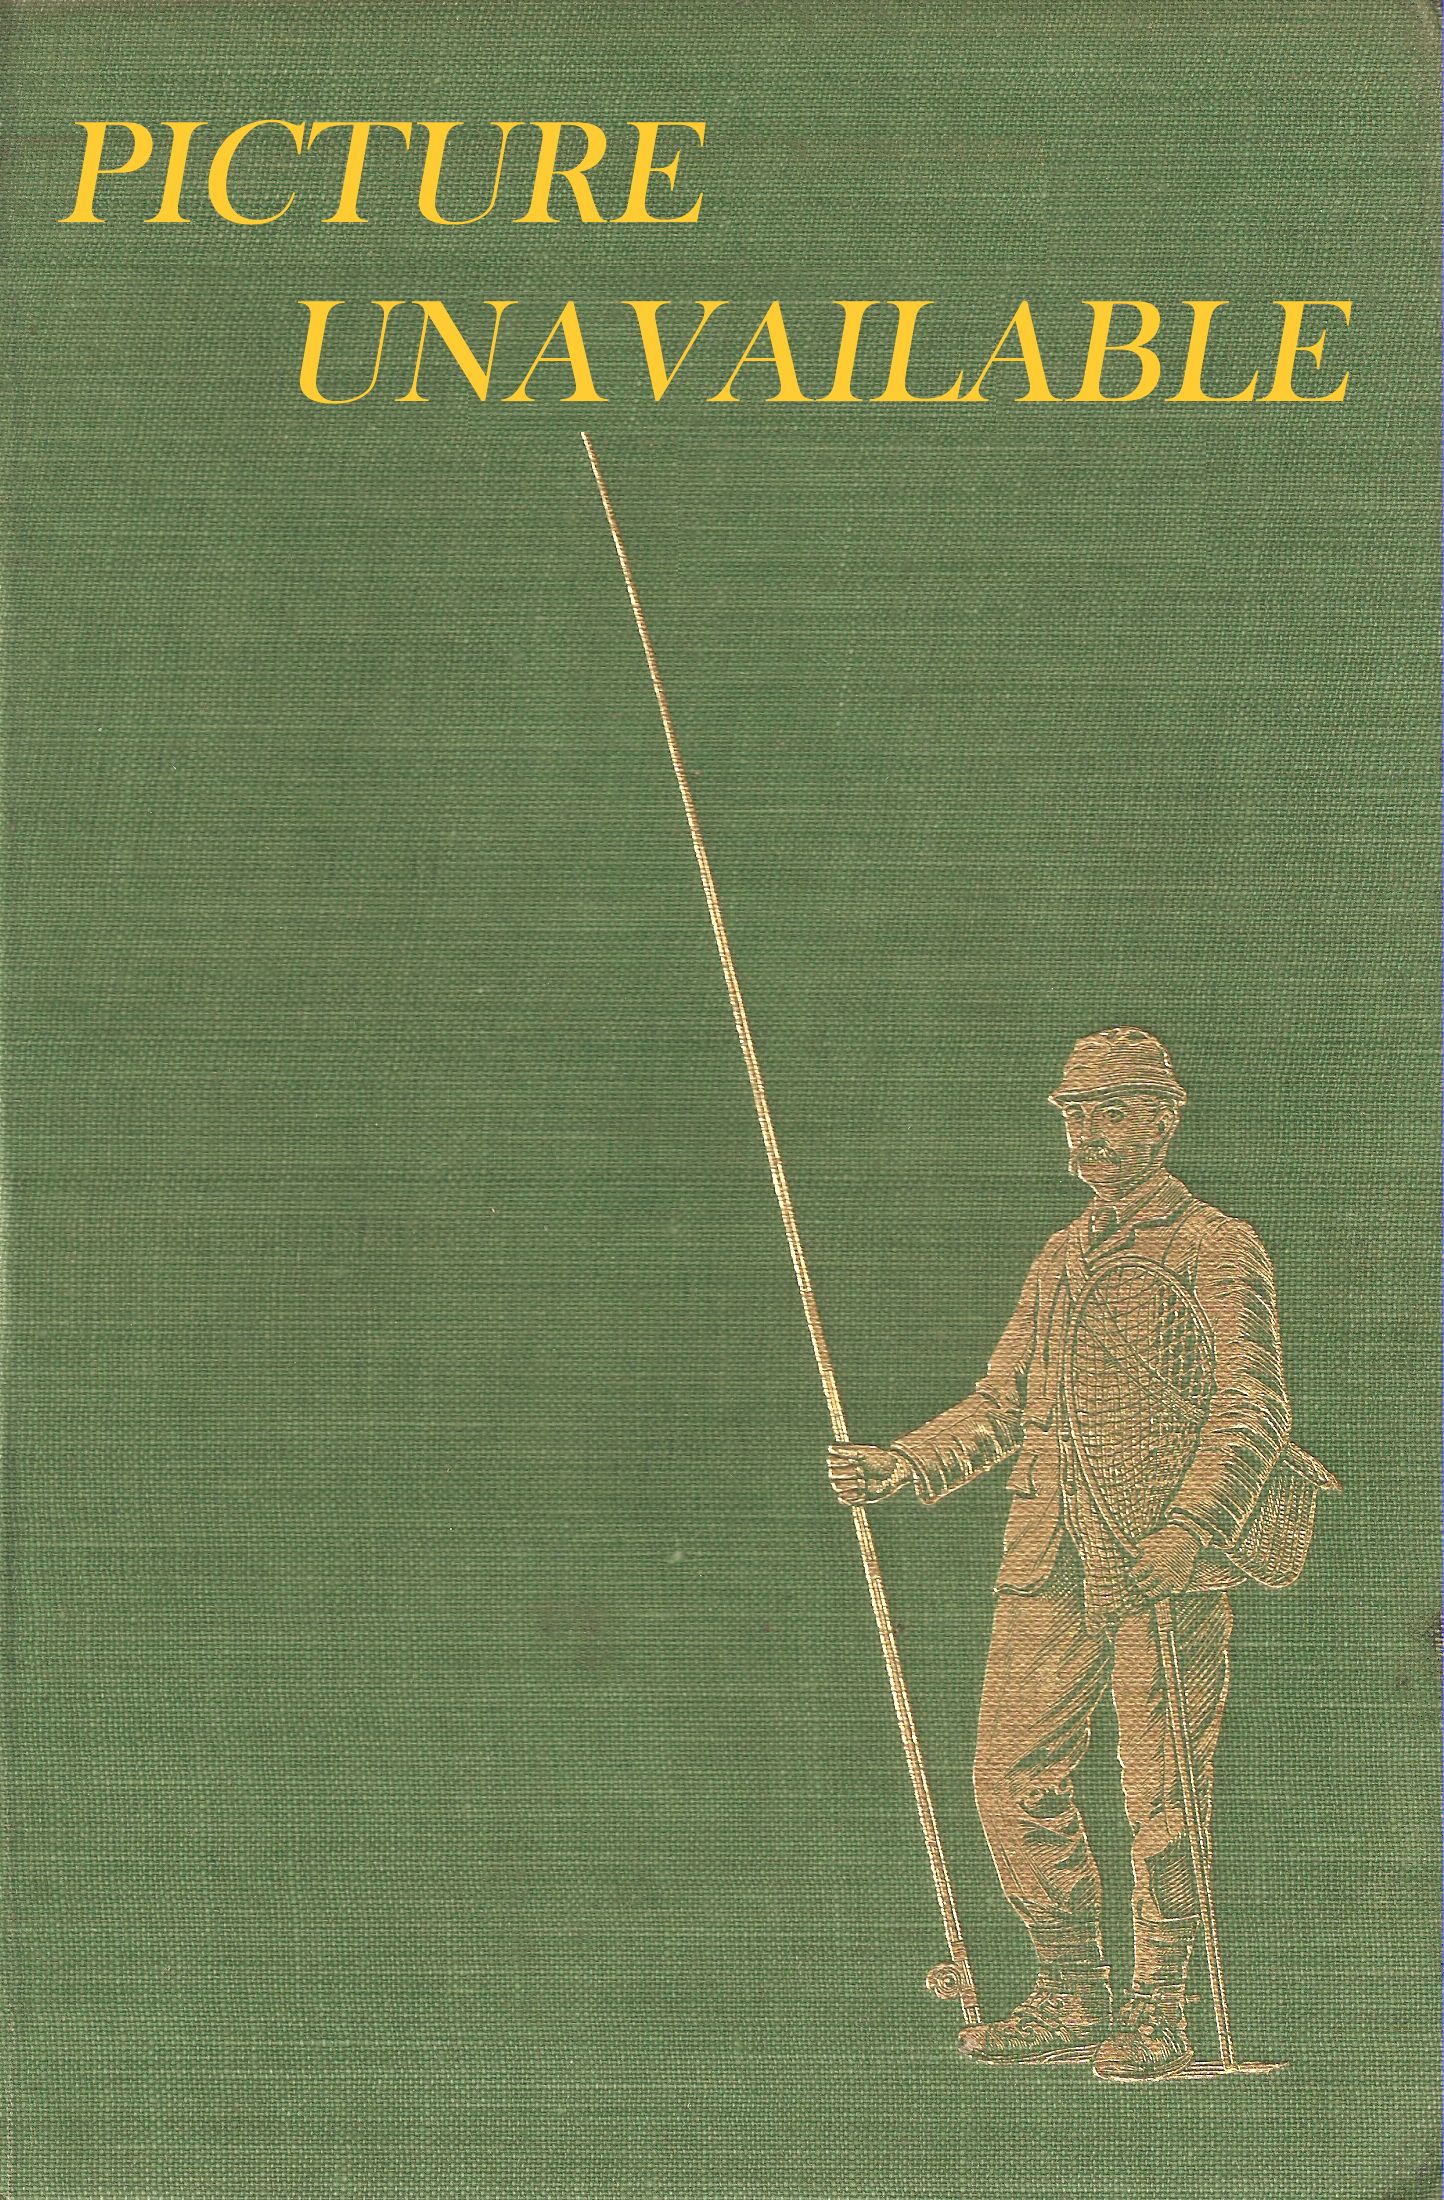 Barbel - Species specific - Coarse fishing - All Fishing Books